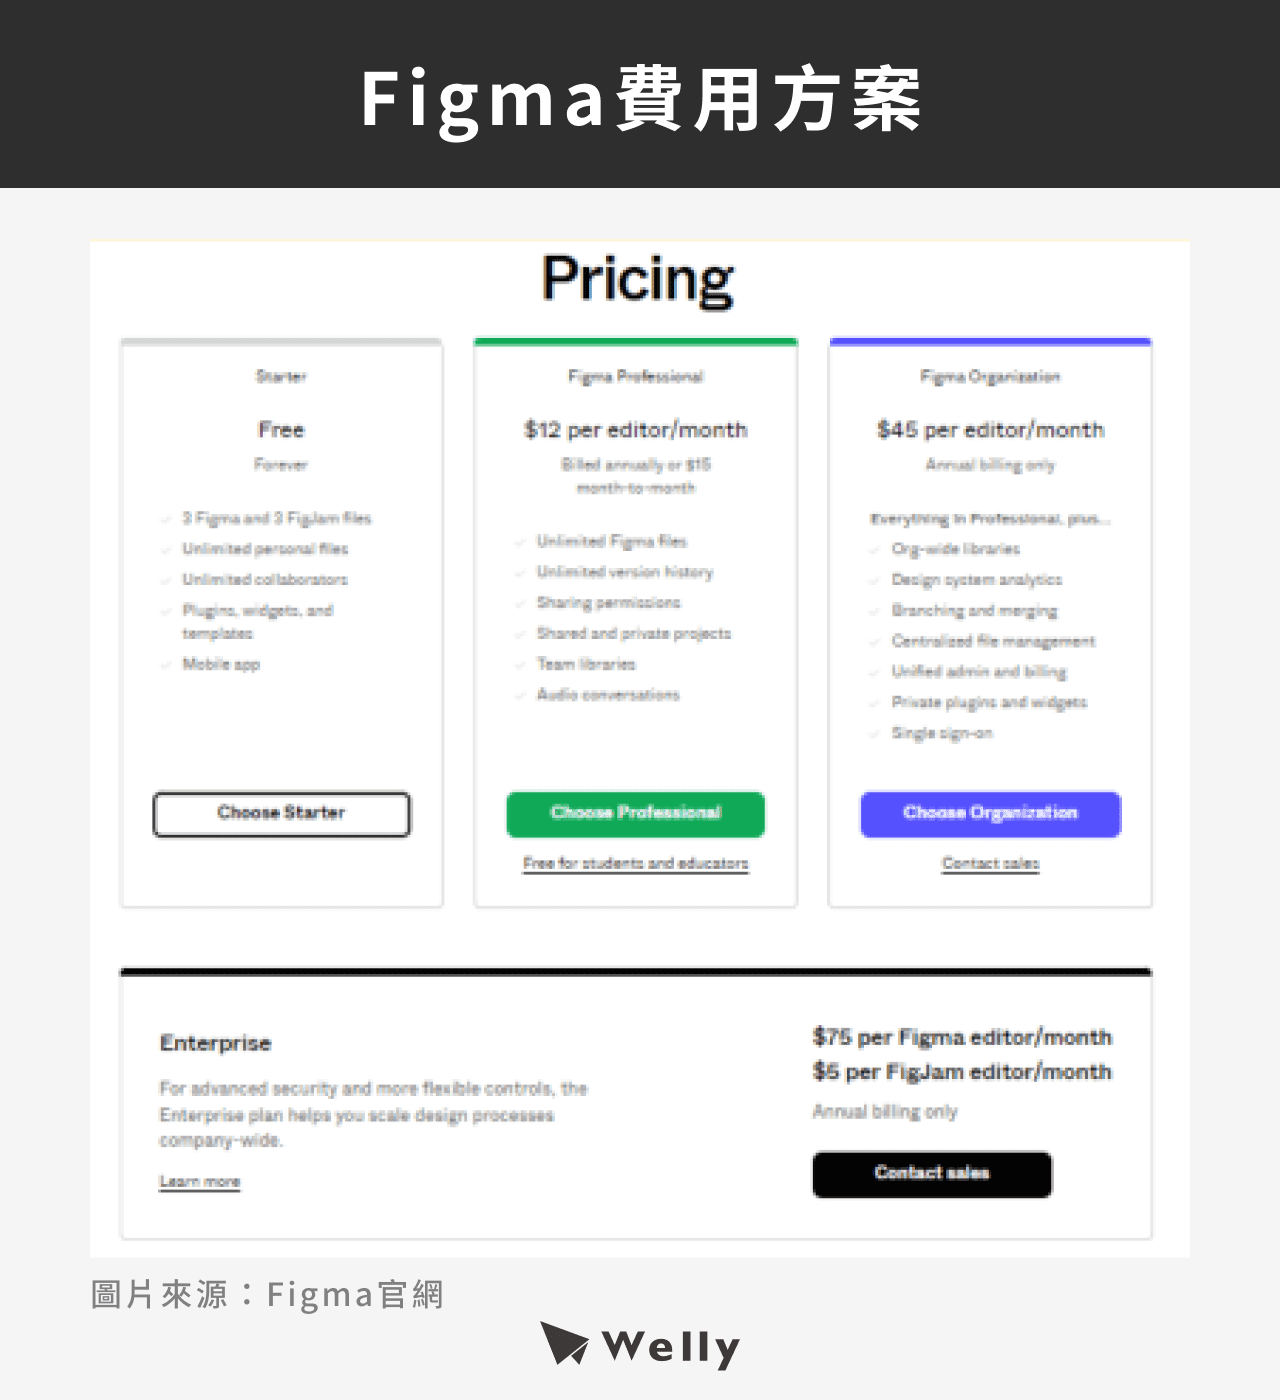 Figma Price